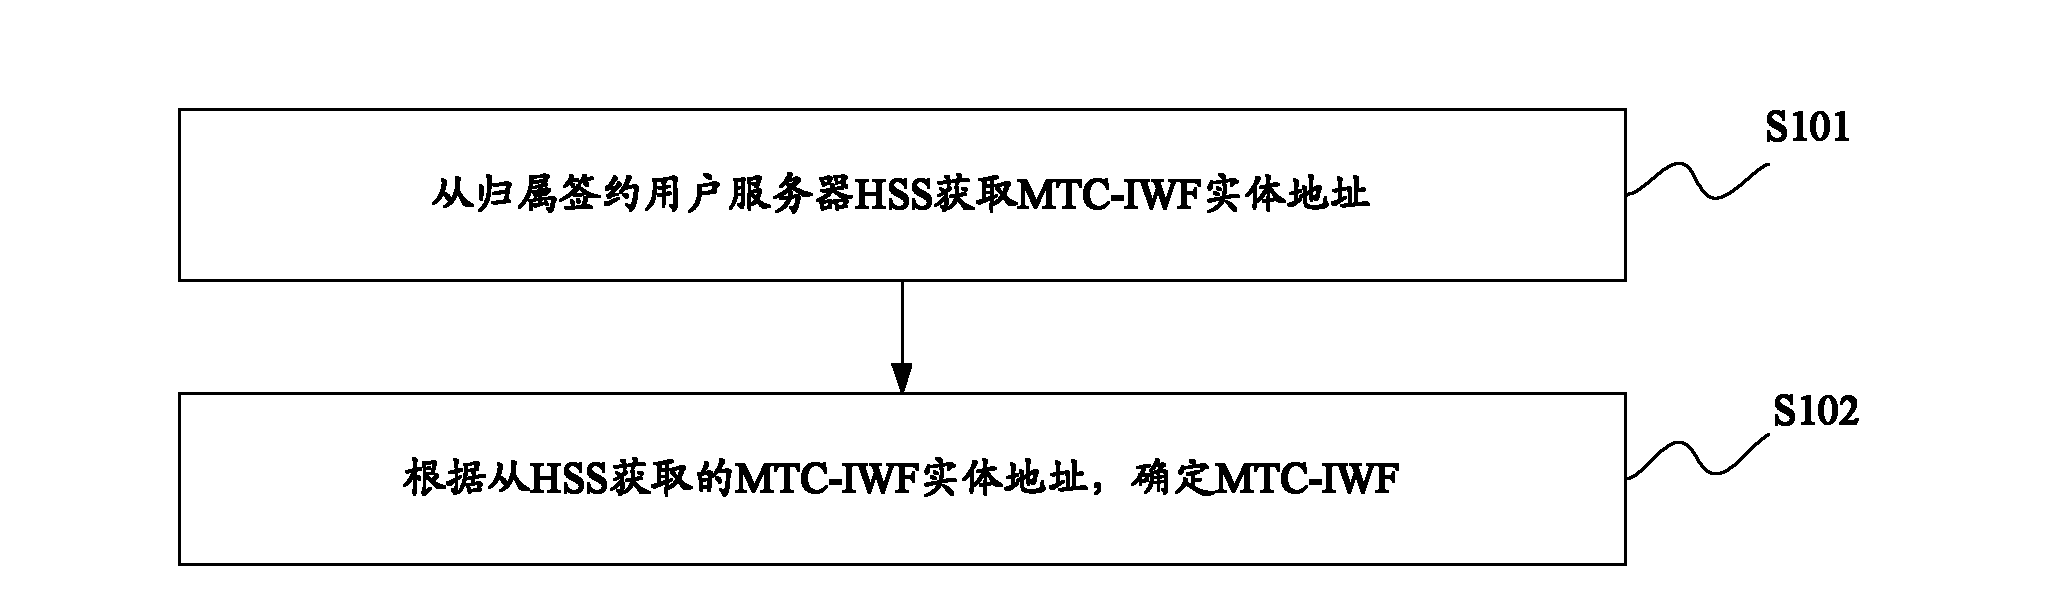 Method and apparatus for determining MTC-IWF entity